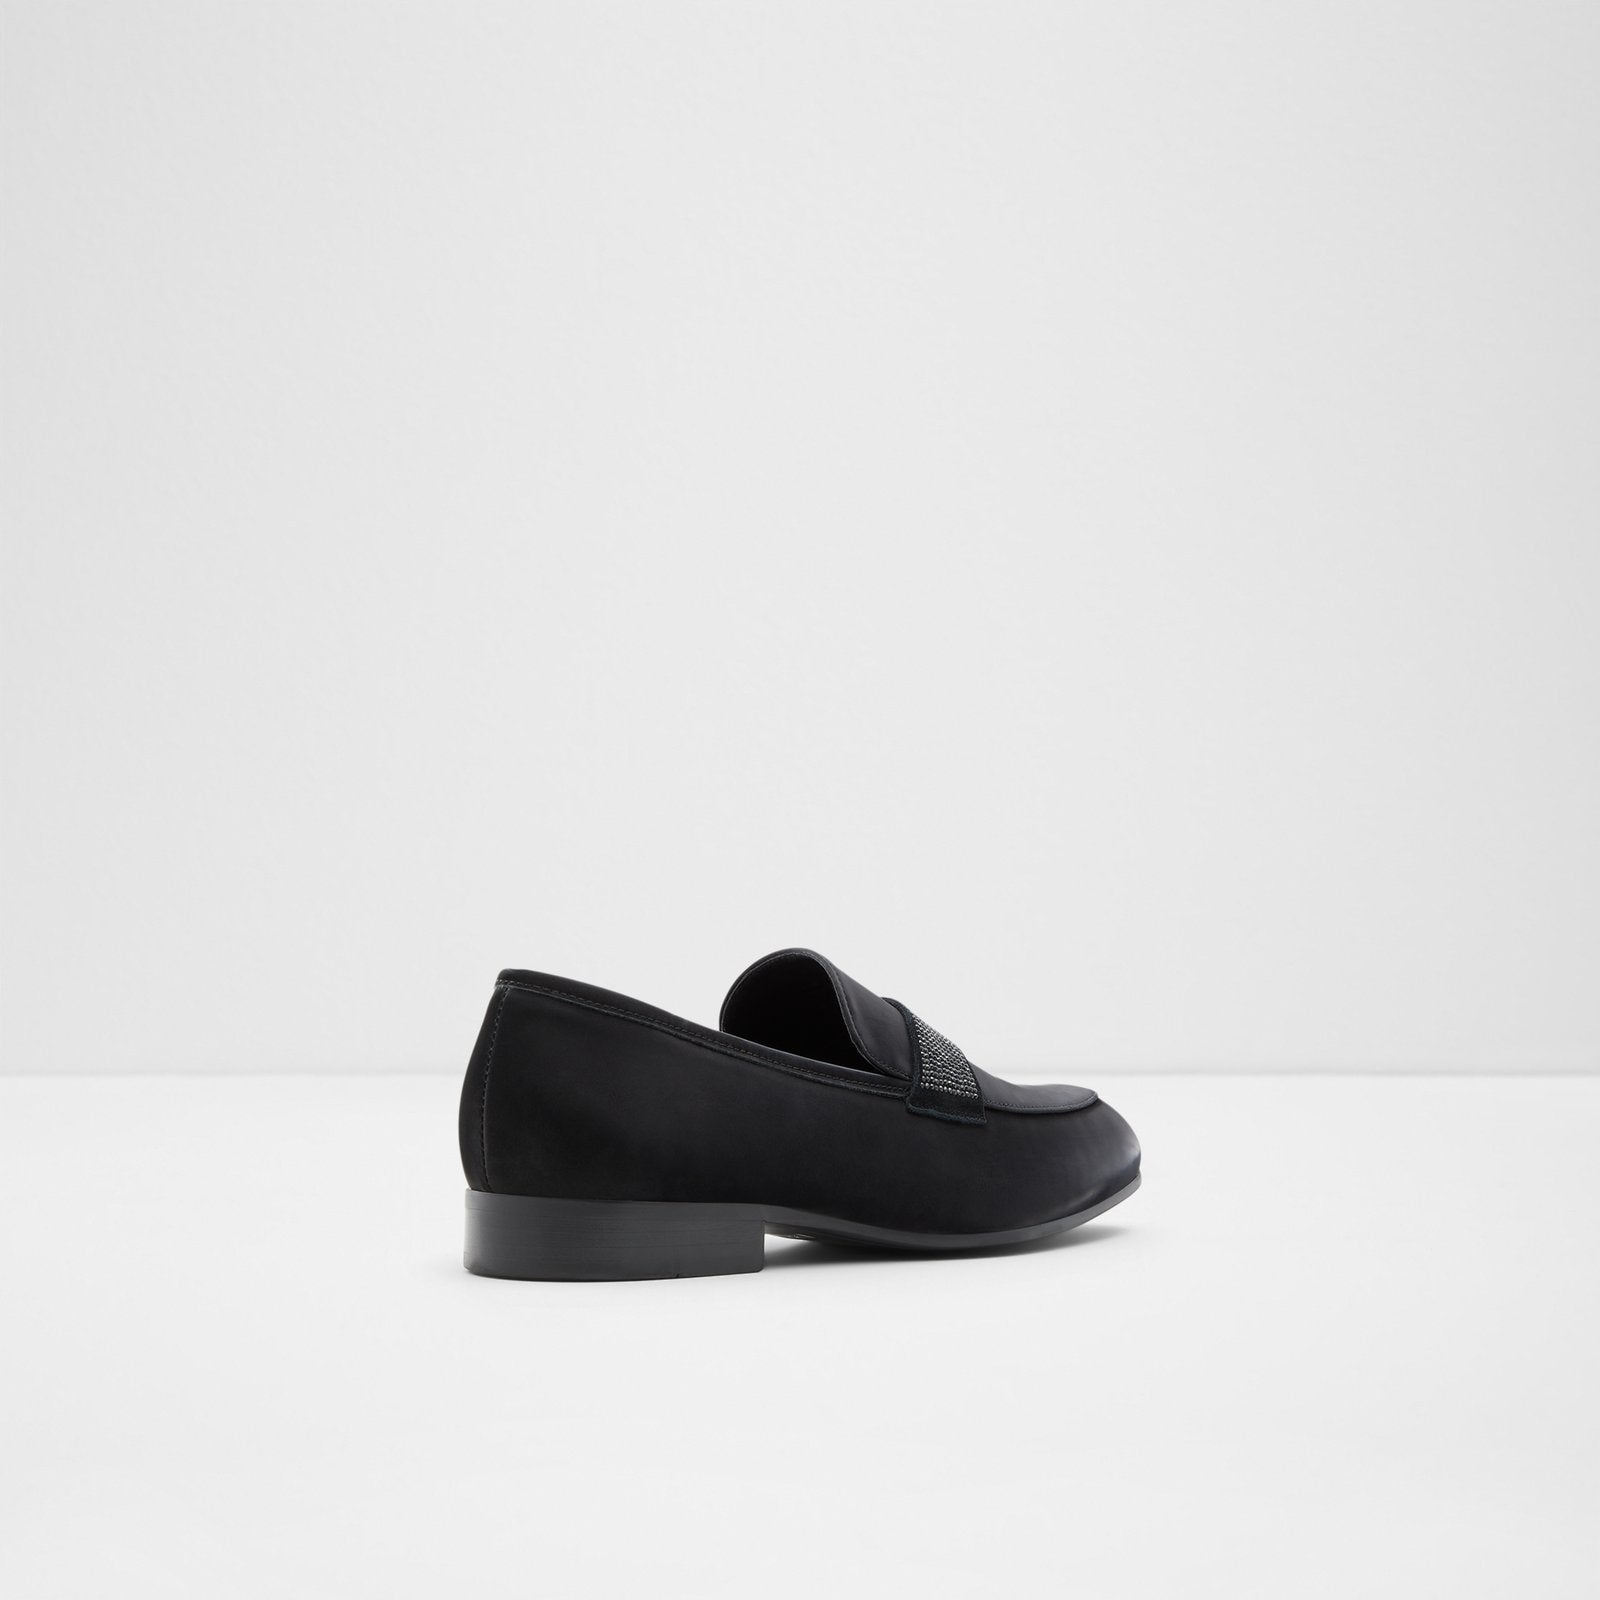 Heckels Men Shoes - Black - ALDO KSA